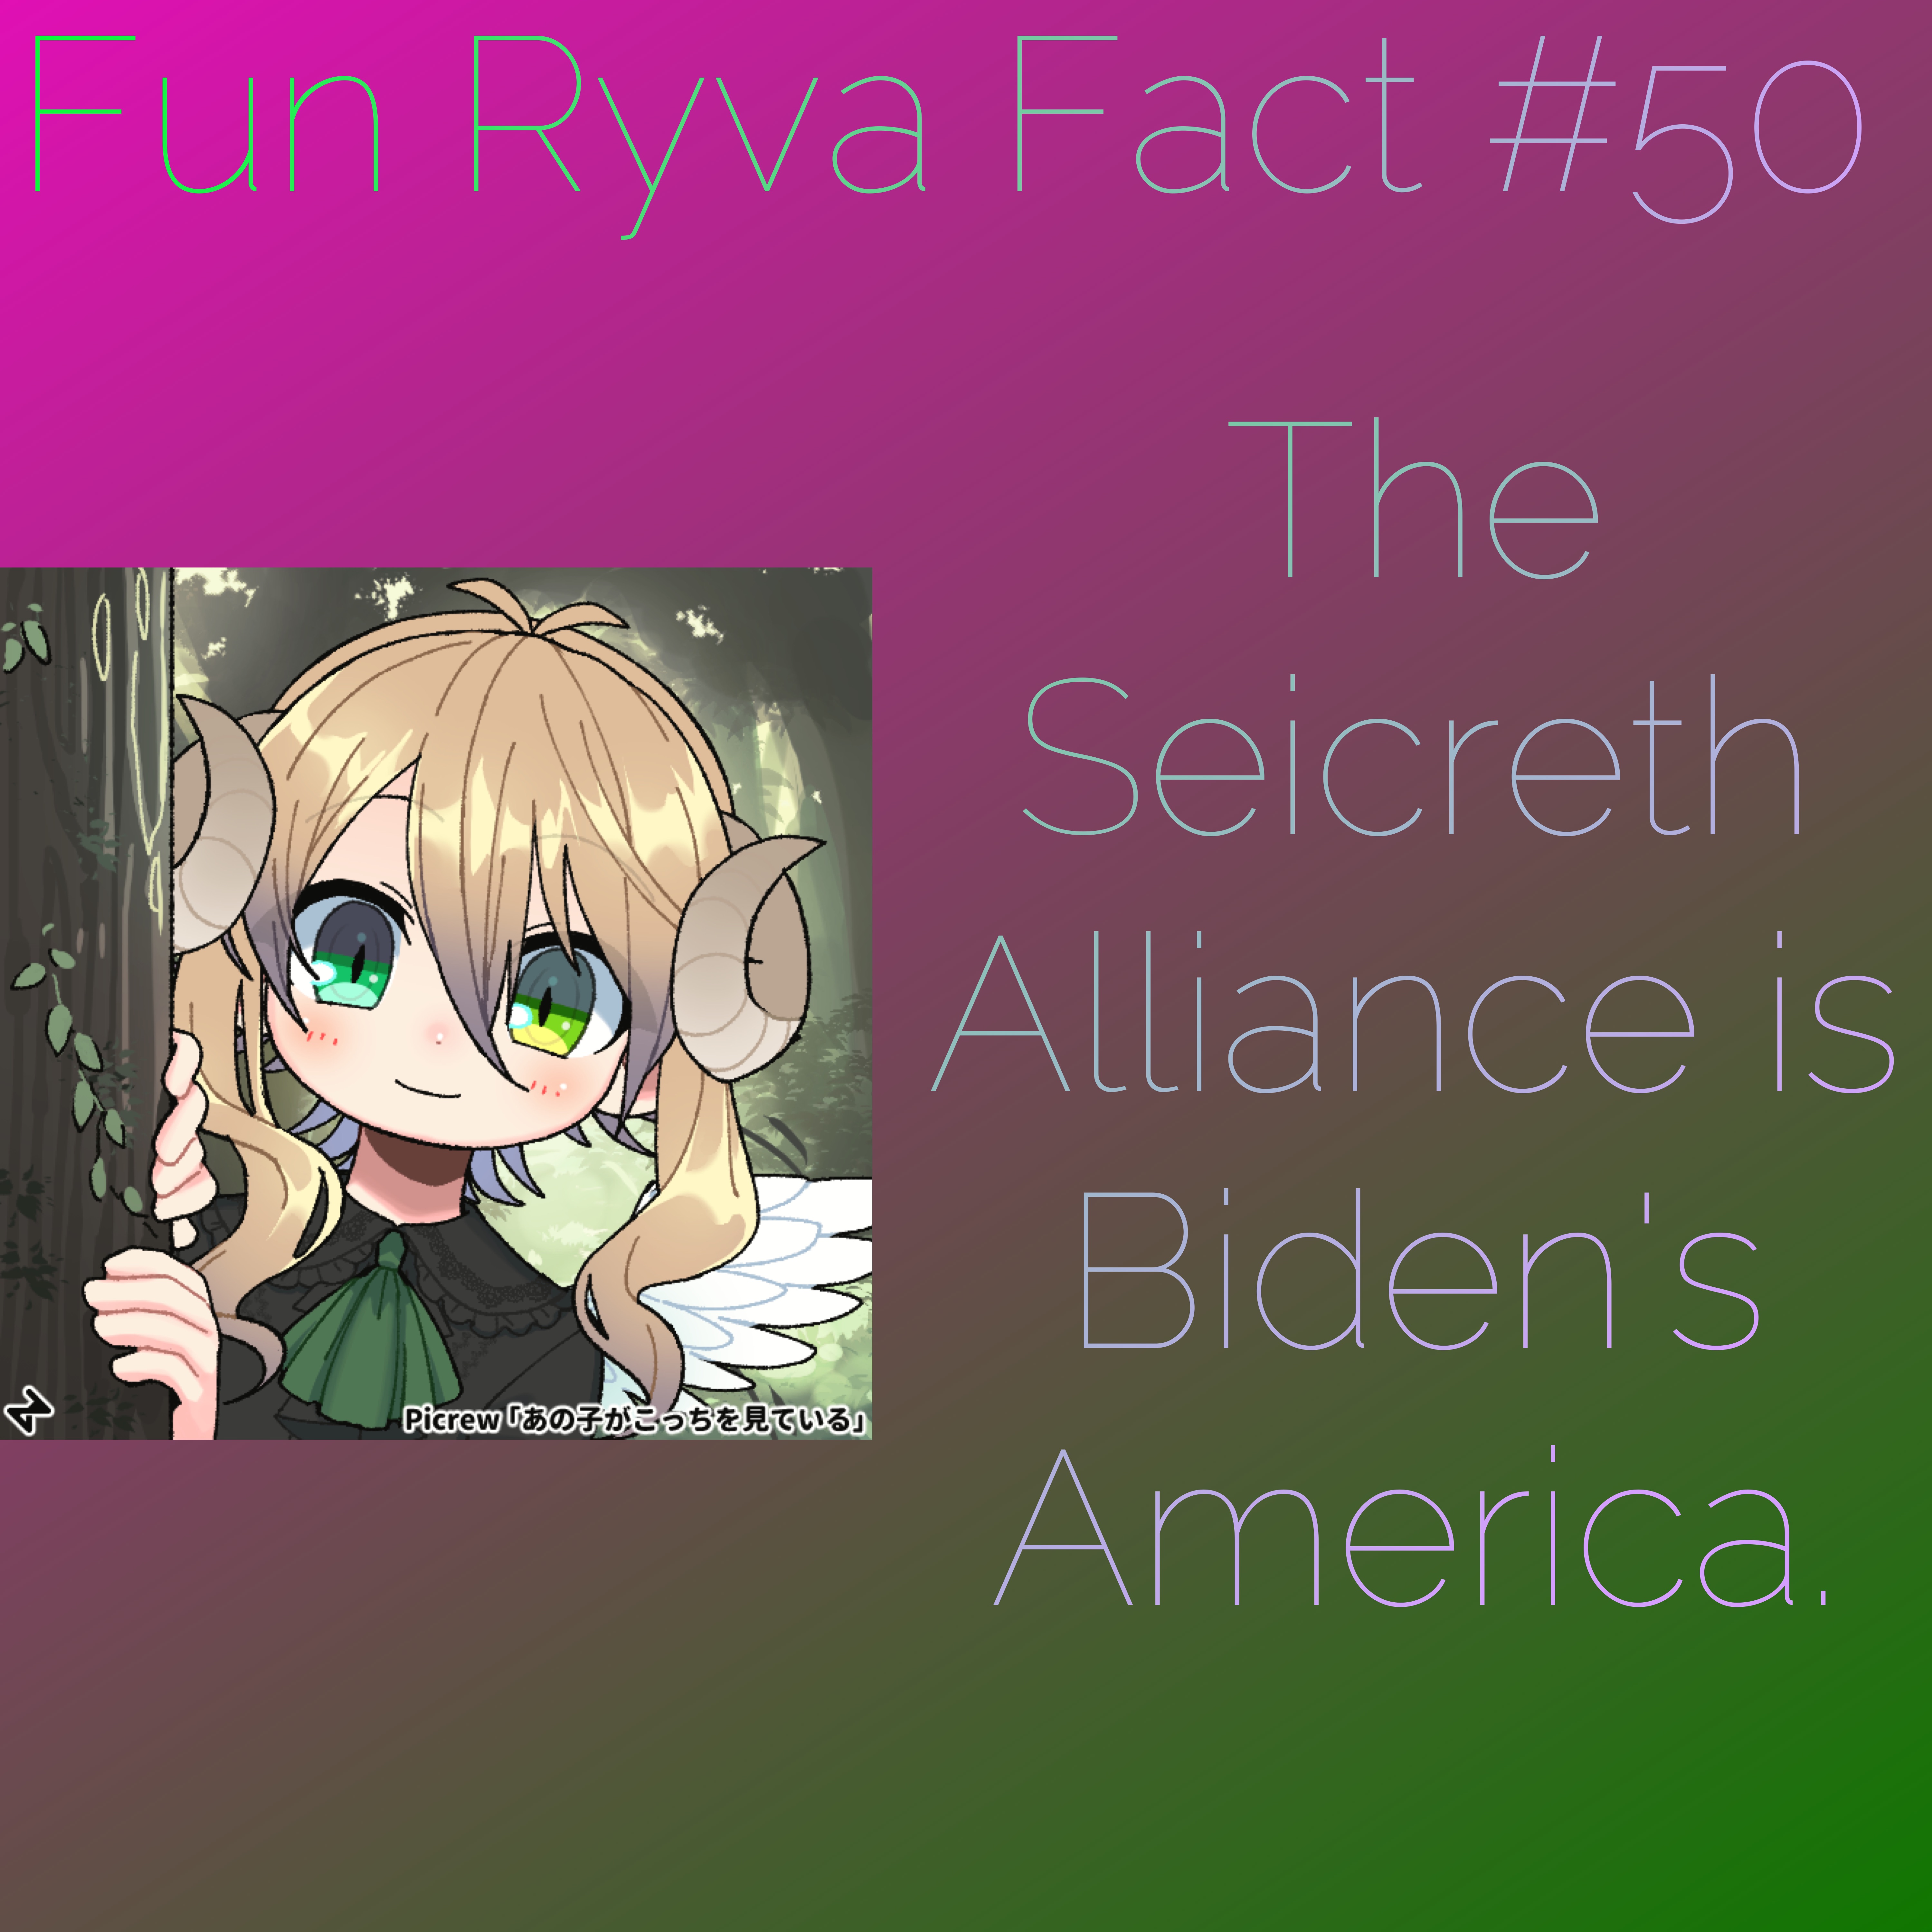 A meme reading "Fun Ryva Fact #50" above text reading "The Seicreth Alliance is Biden's America."